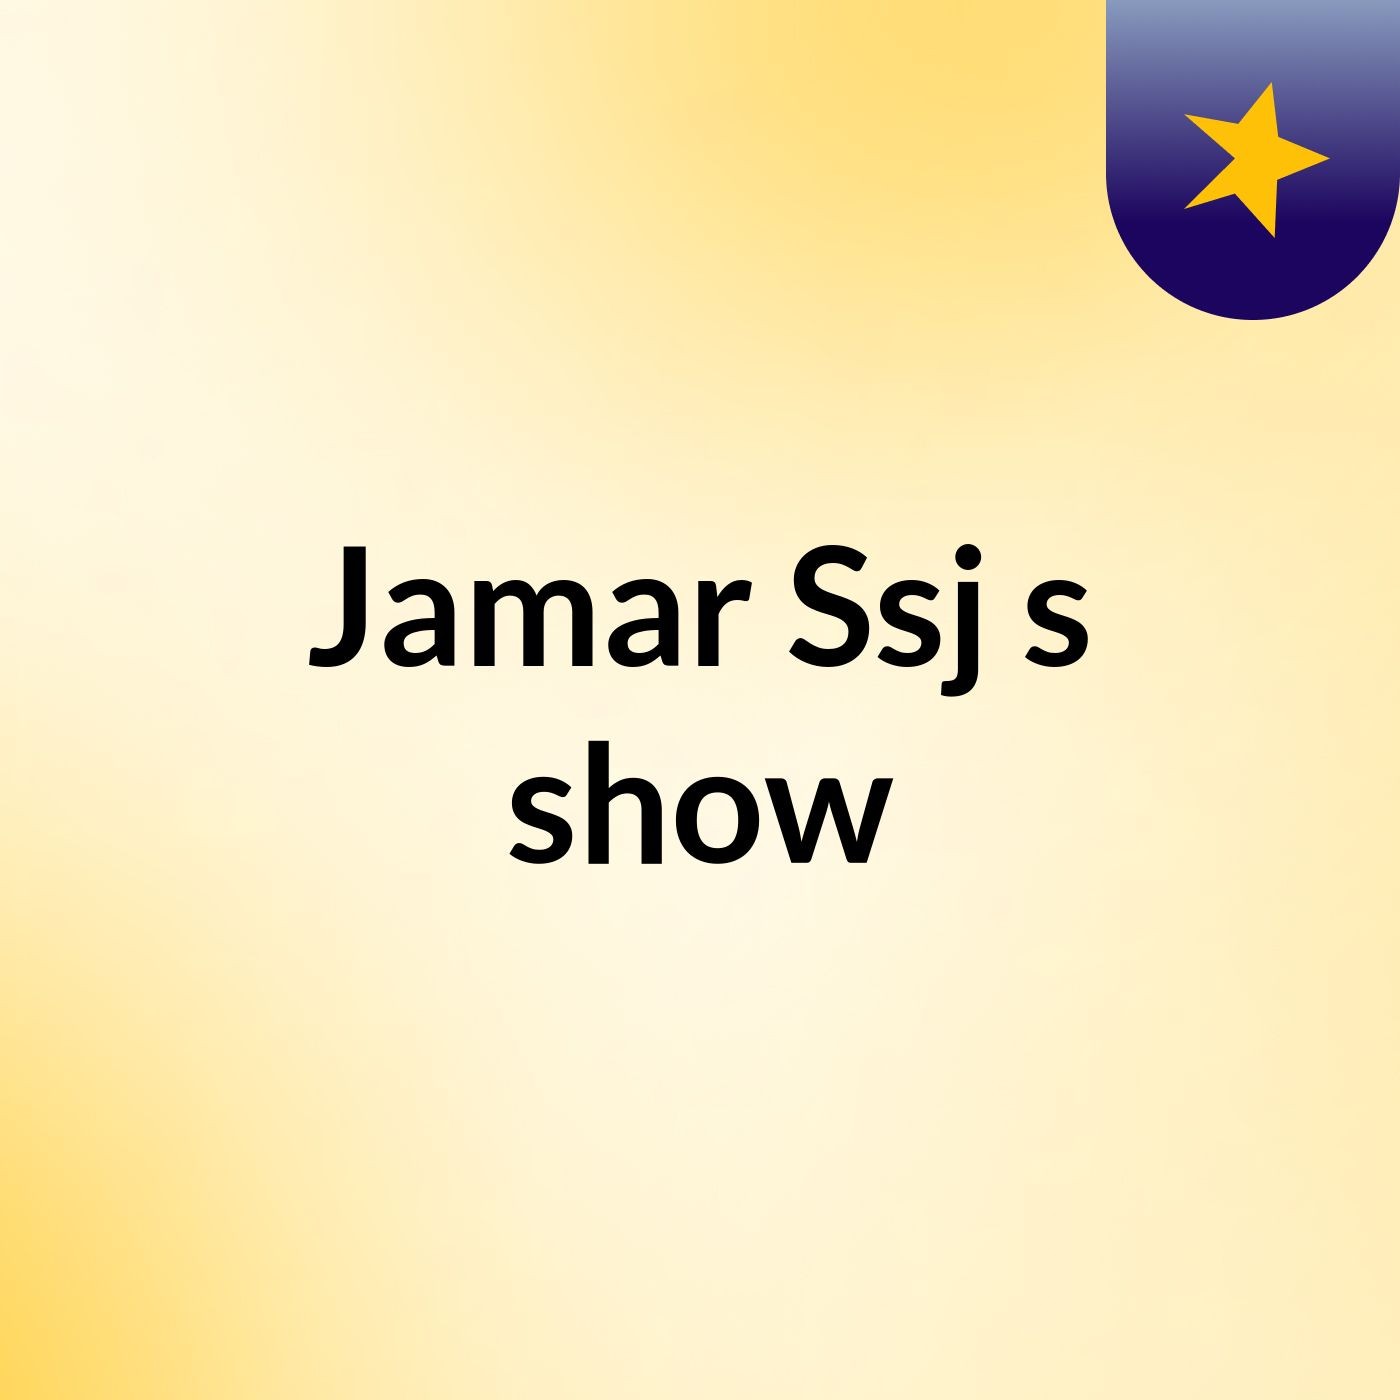 Jamar Ssj's show